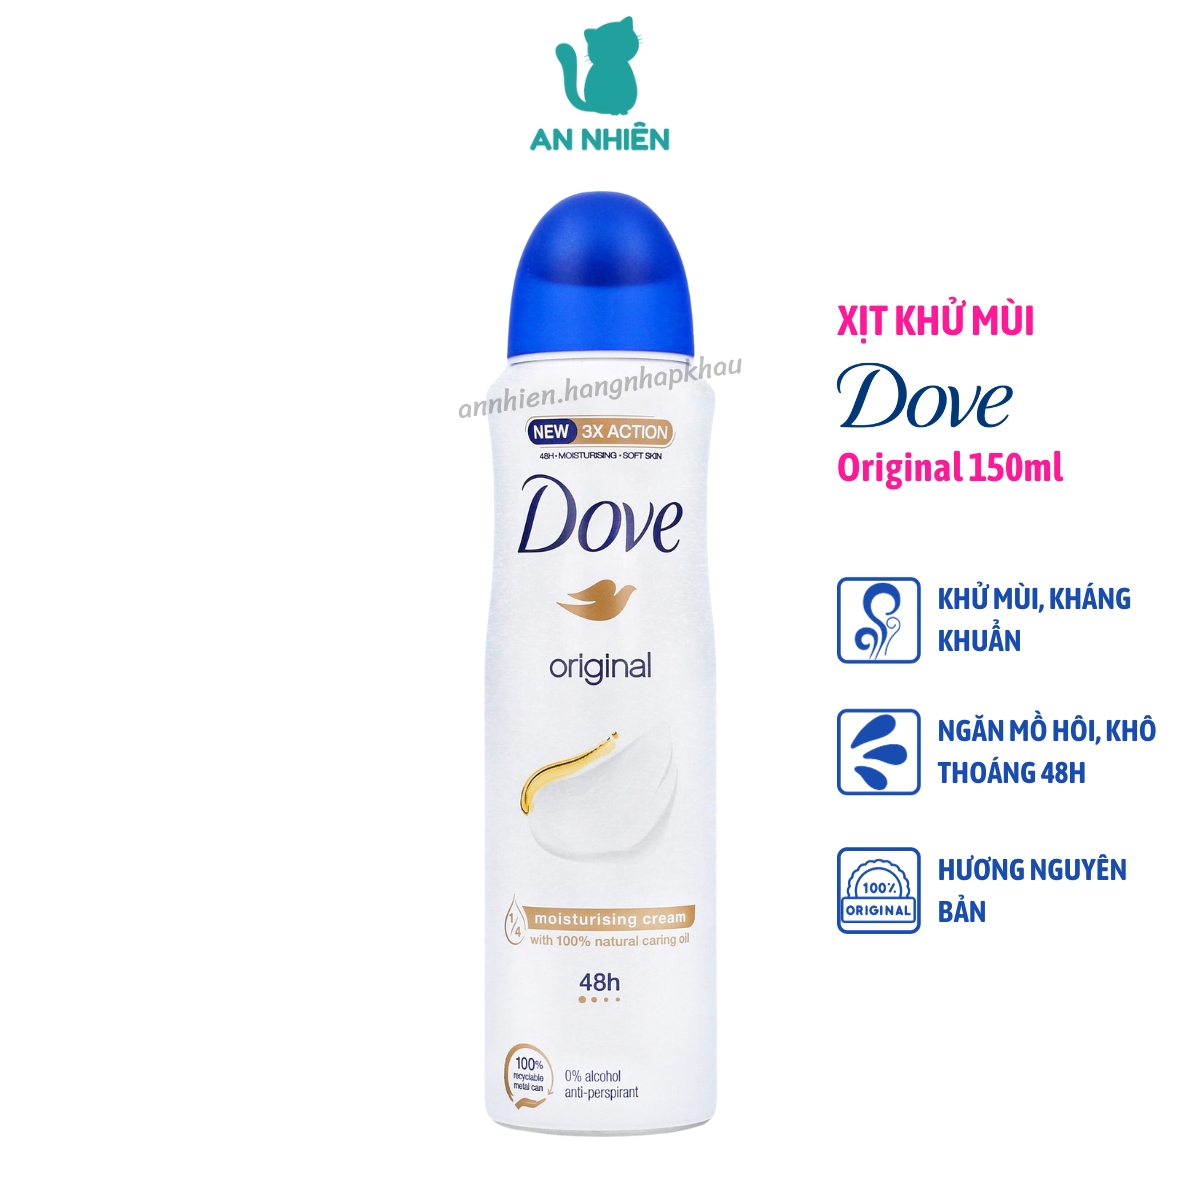 Dove Original deodorant body spray 150ml